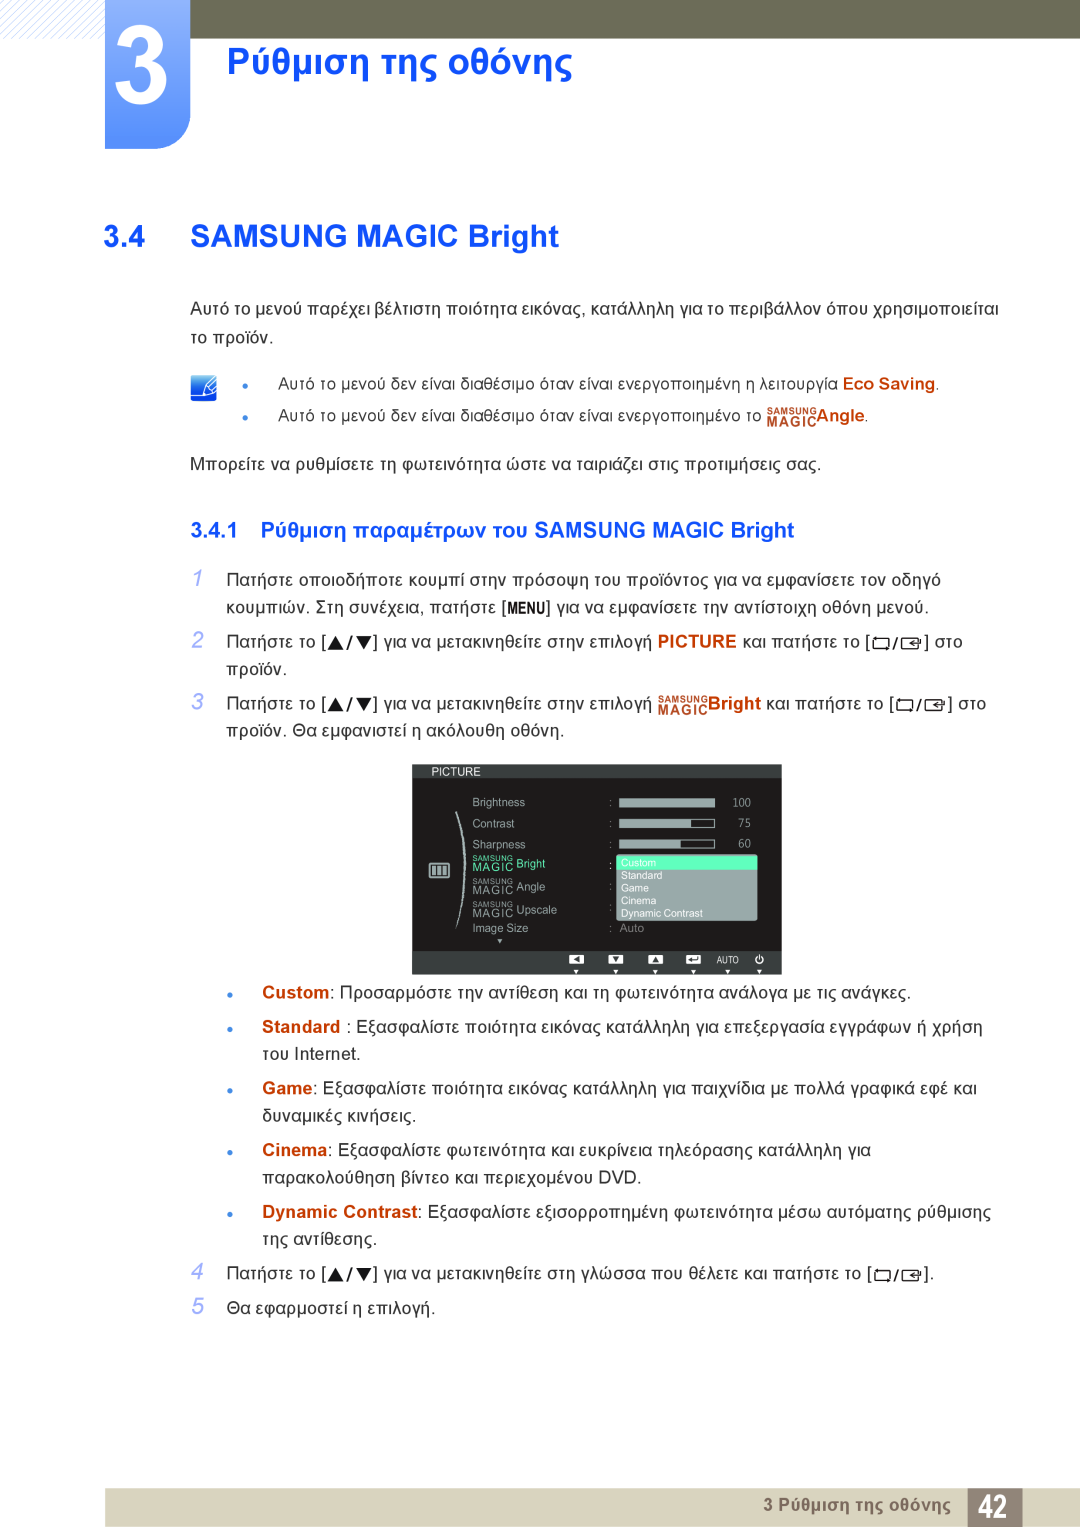 Samsung LS24C45KBW/EN, LS22C45KMS/EN manual 3.4.1 Ρύθμιση παραμέτρων του SAMSUNG MAGIC Bright, 3 Ρύθμιση της οθόνης 